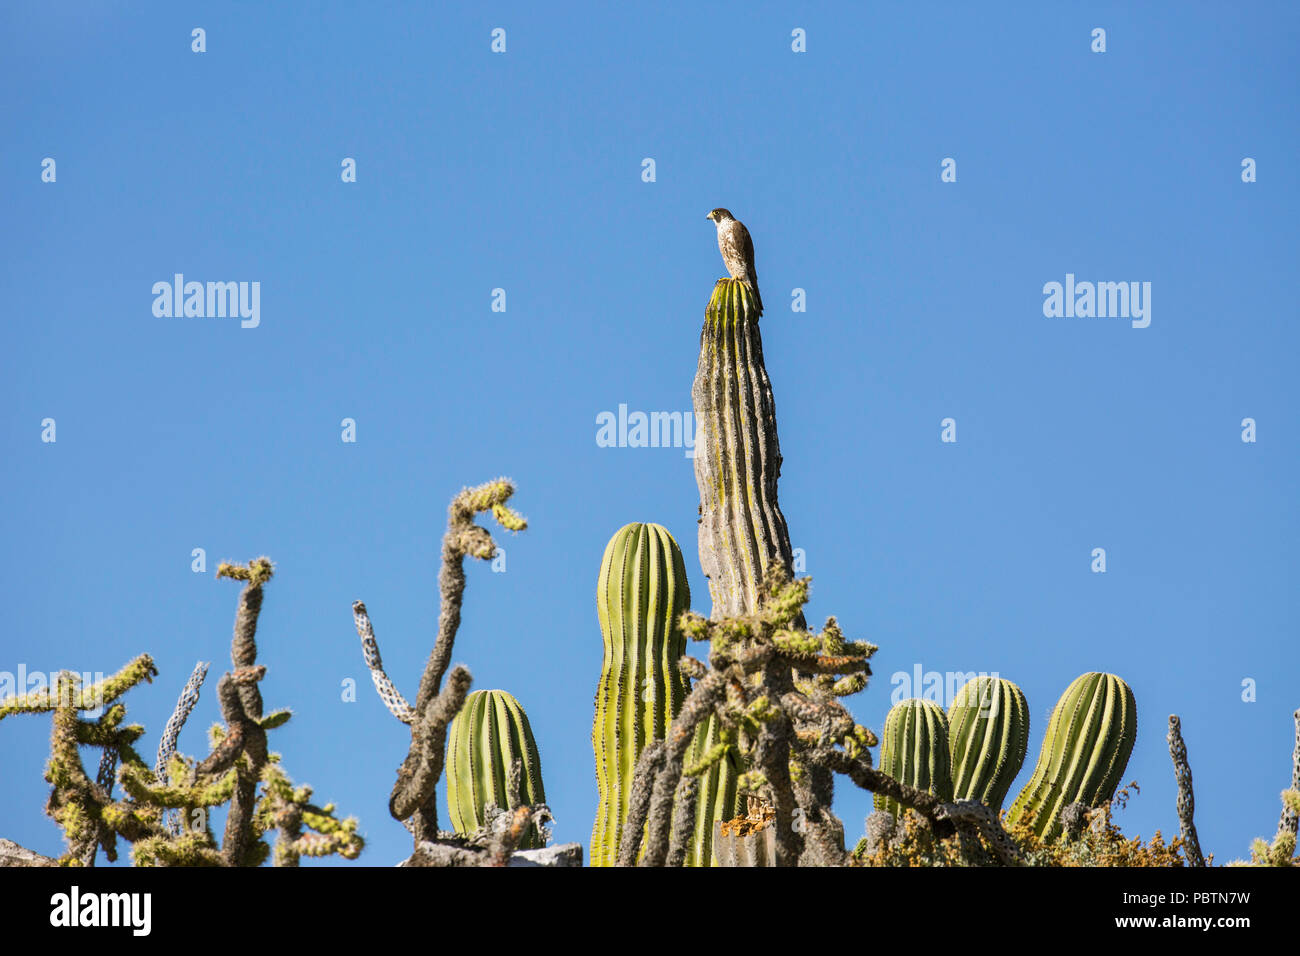 Adult peregrine falcon, Falco peregrinus, on cardon cactus, Isla Rasa, Baja California, Mexico. Stock Photo